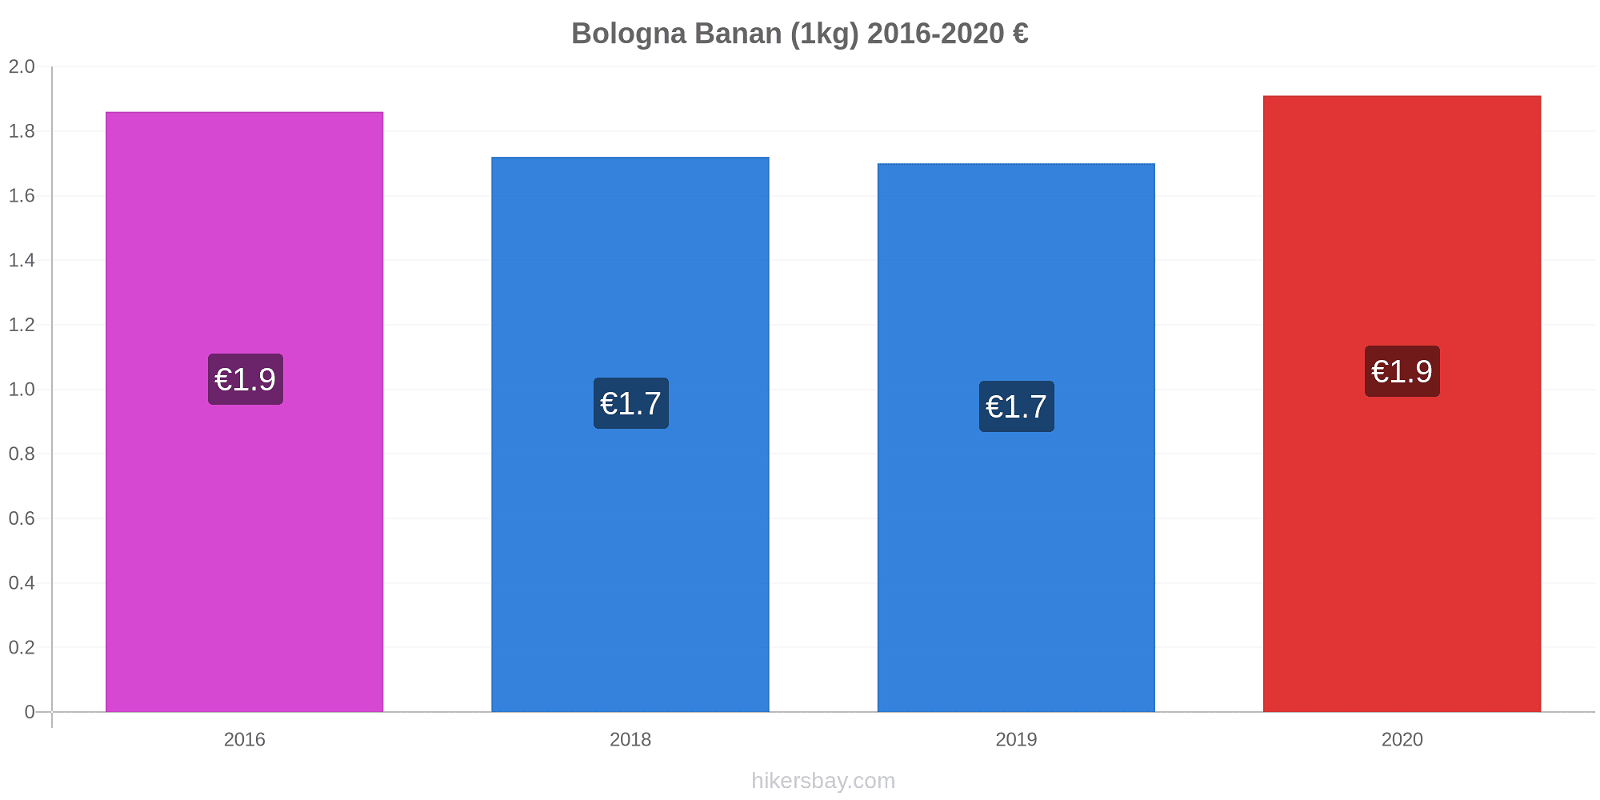 Bologna prisendringer Banan (1kg) hikersbay.com